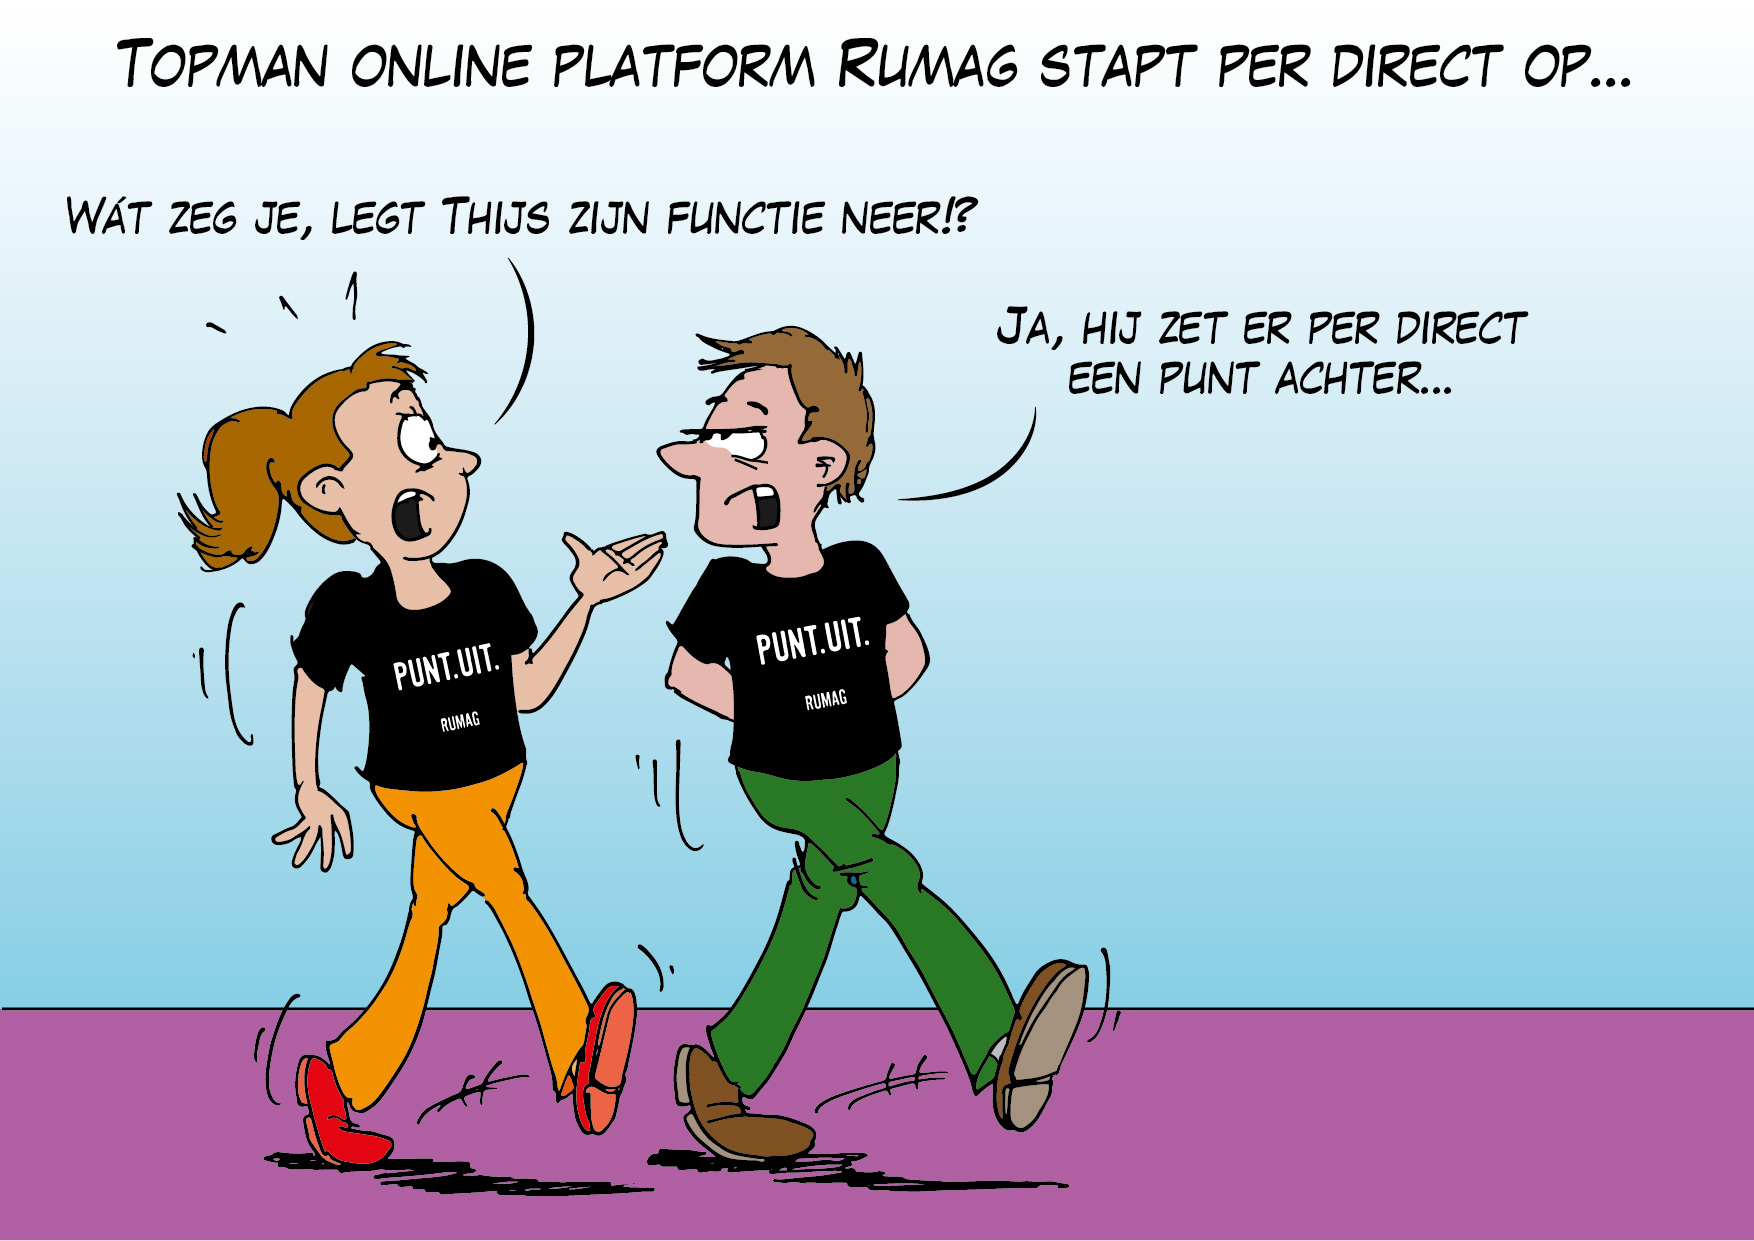 Topman online platform RUMAG stapt per direct op…